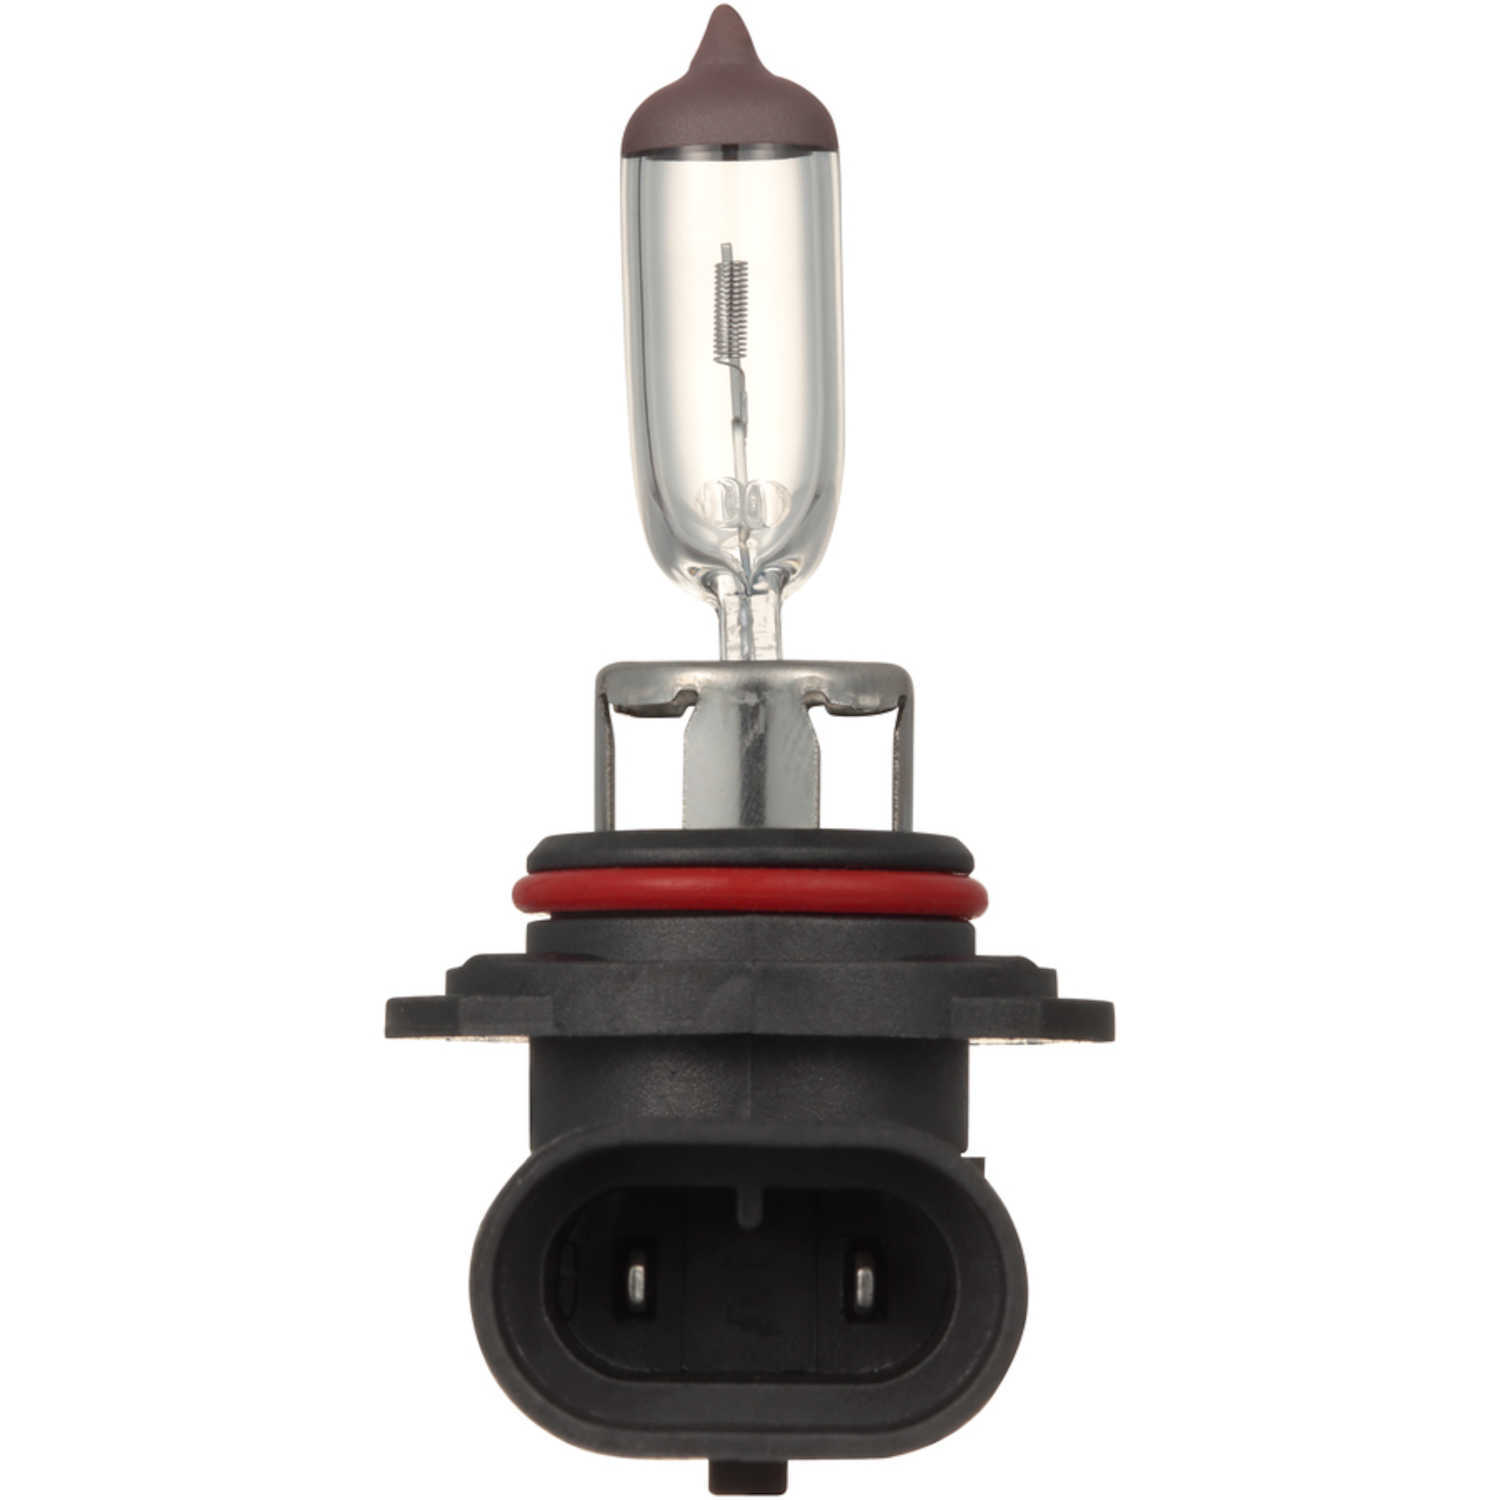 PEAK/OLD WORLD INDUSTRIES - Standard Lamp - Boxed - PKO 9006